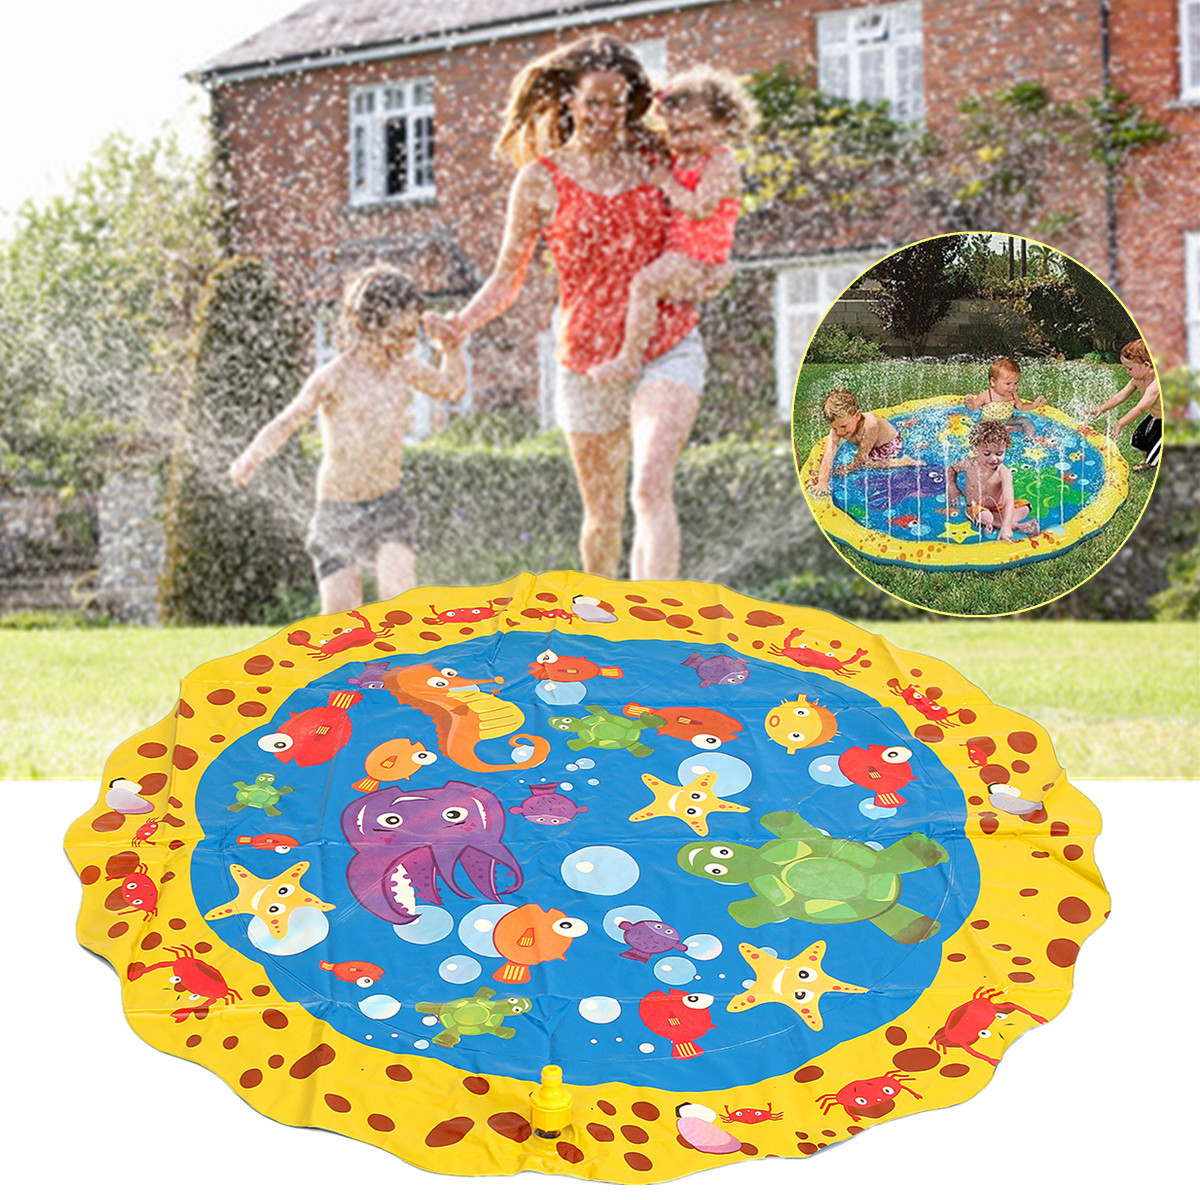 Inflatable-Splash-Water-Mat-Sprinkle-Splash-Play-Mat-Fun-Summer-Spray-ToysInflatable-Pad-Outdoor-Wat-1868724-11